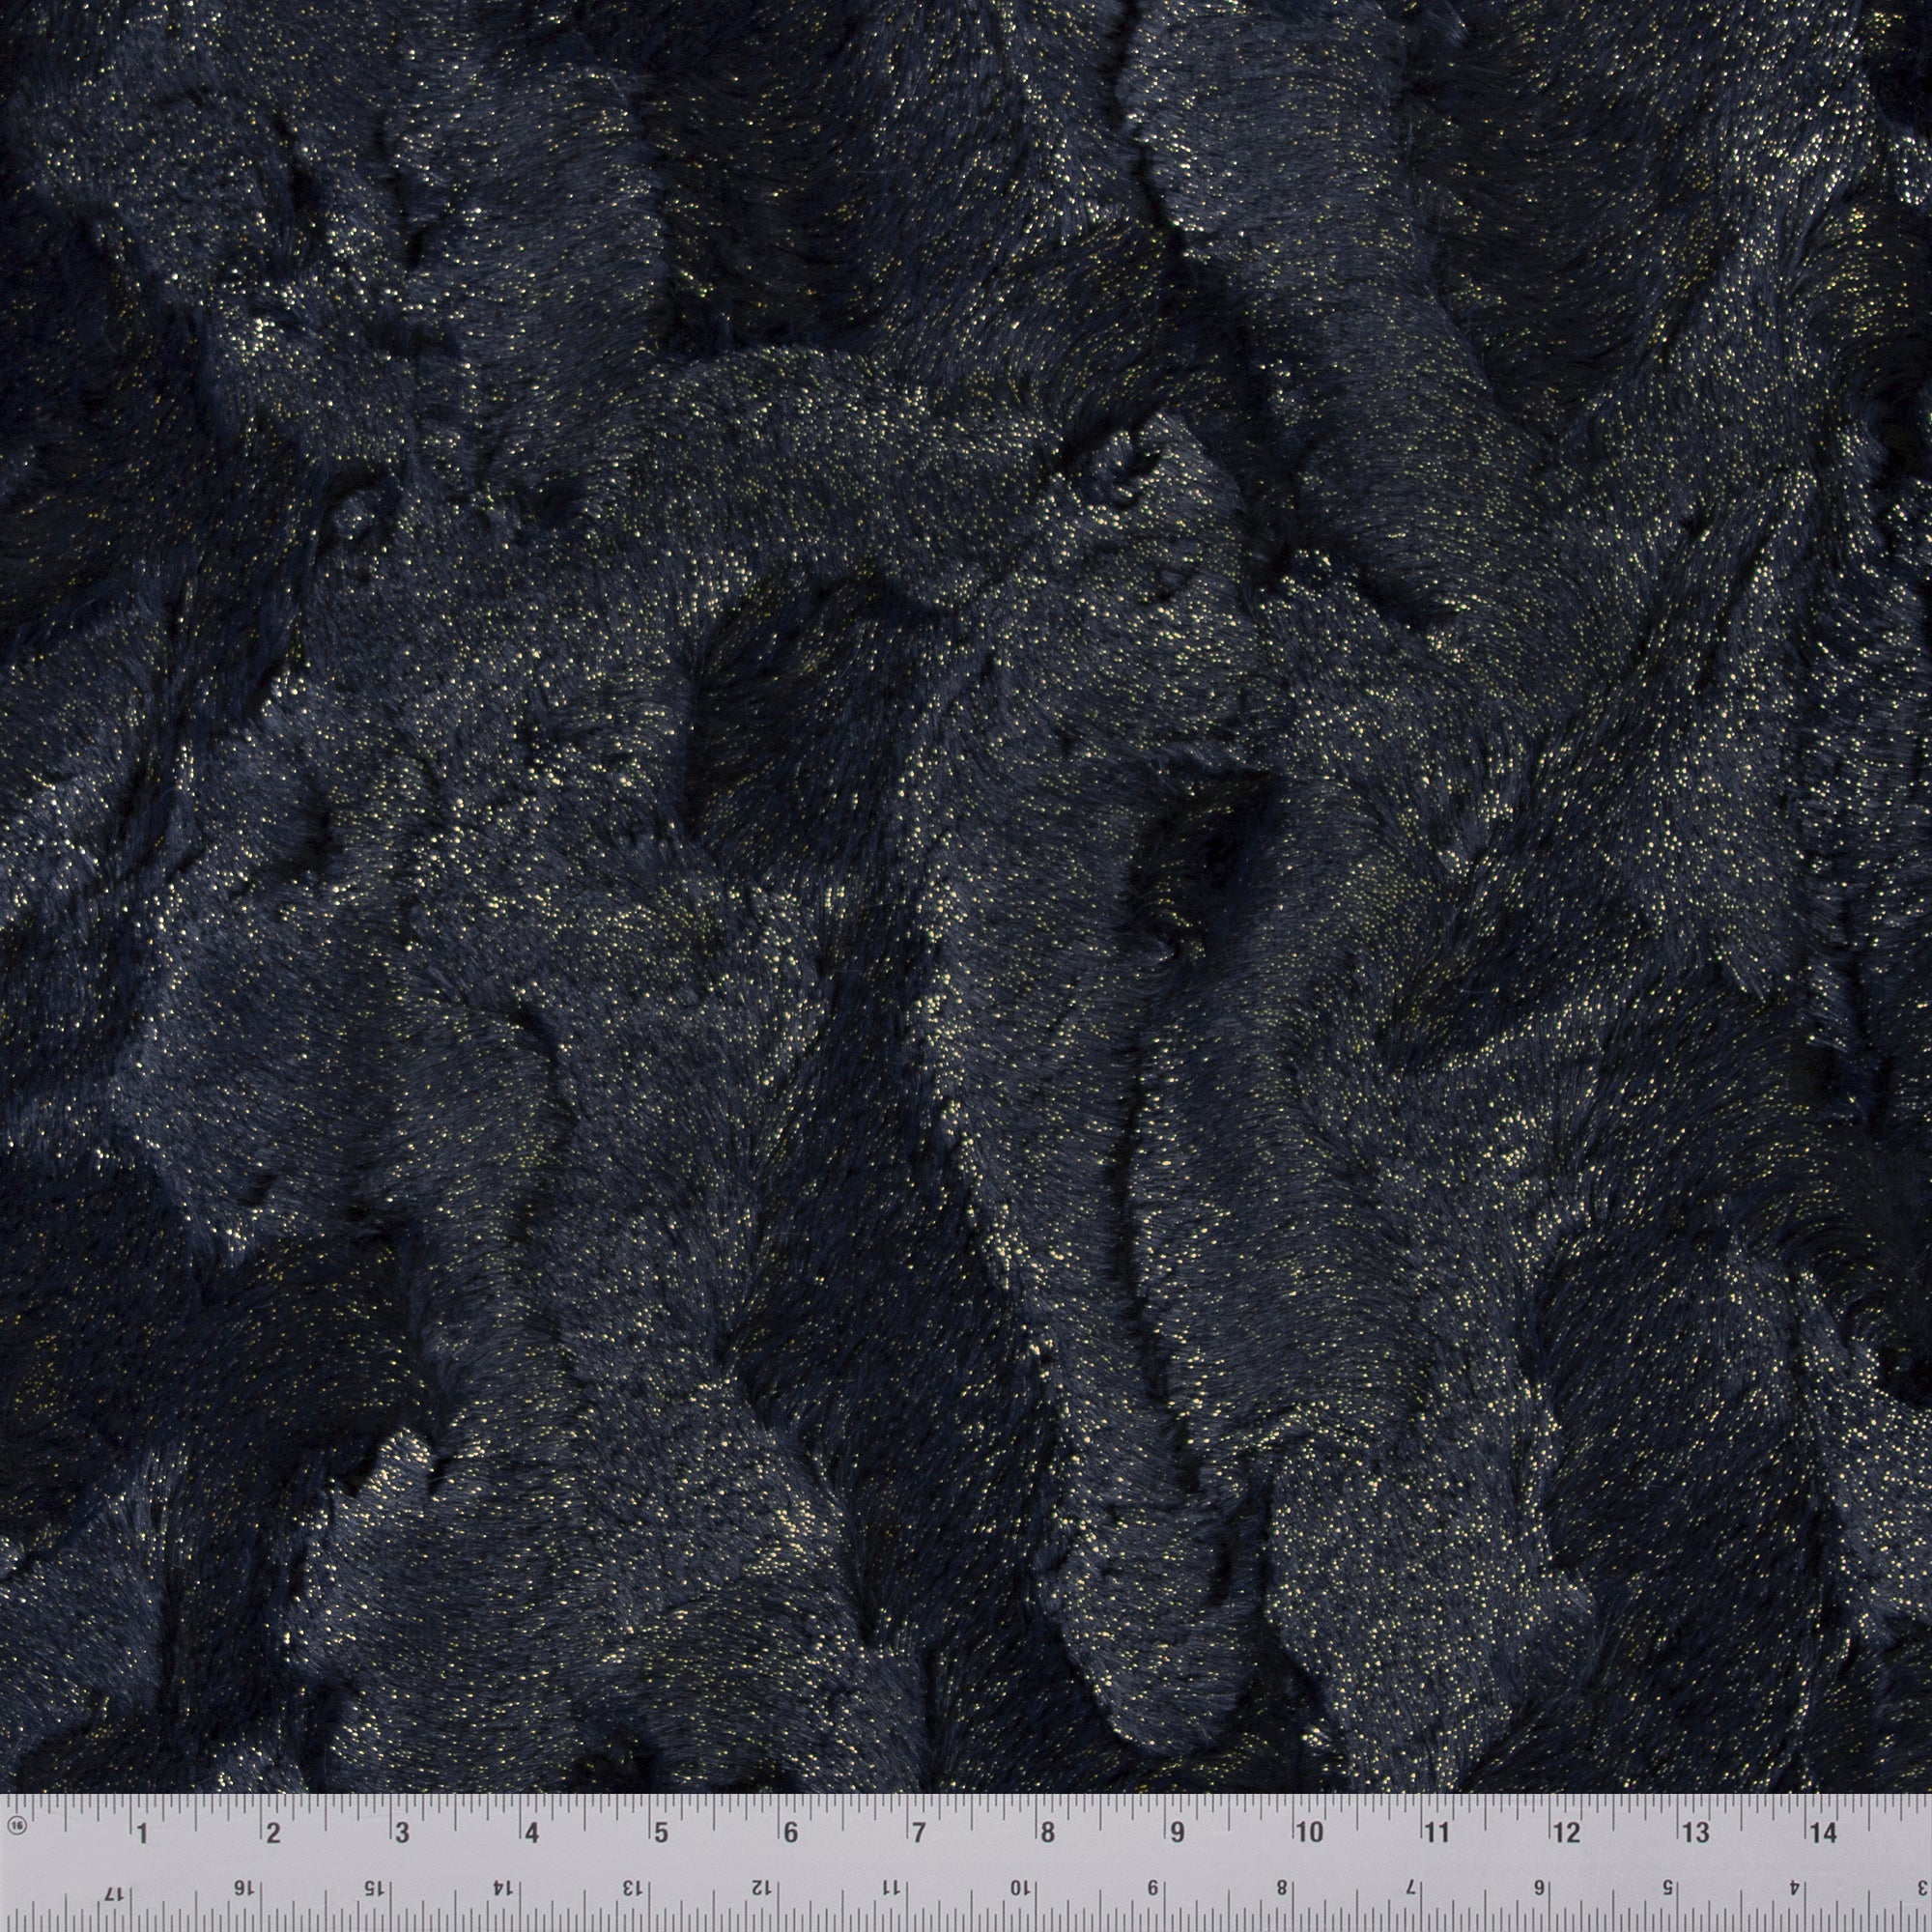 Black Granite texture Soft Handfeel Plush Fabric